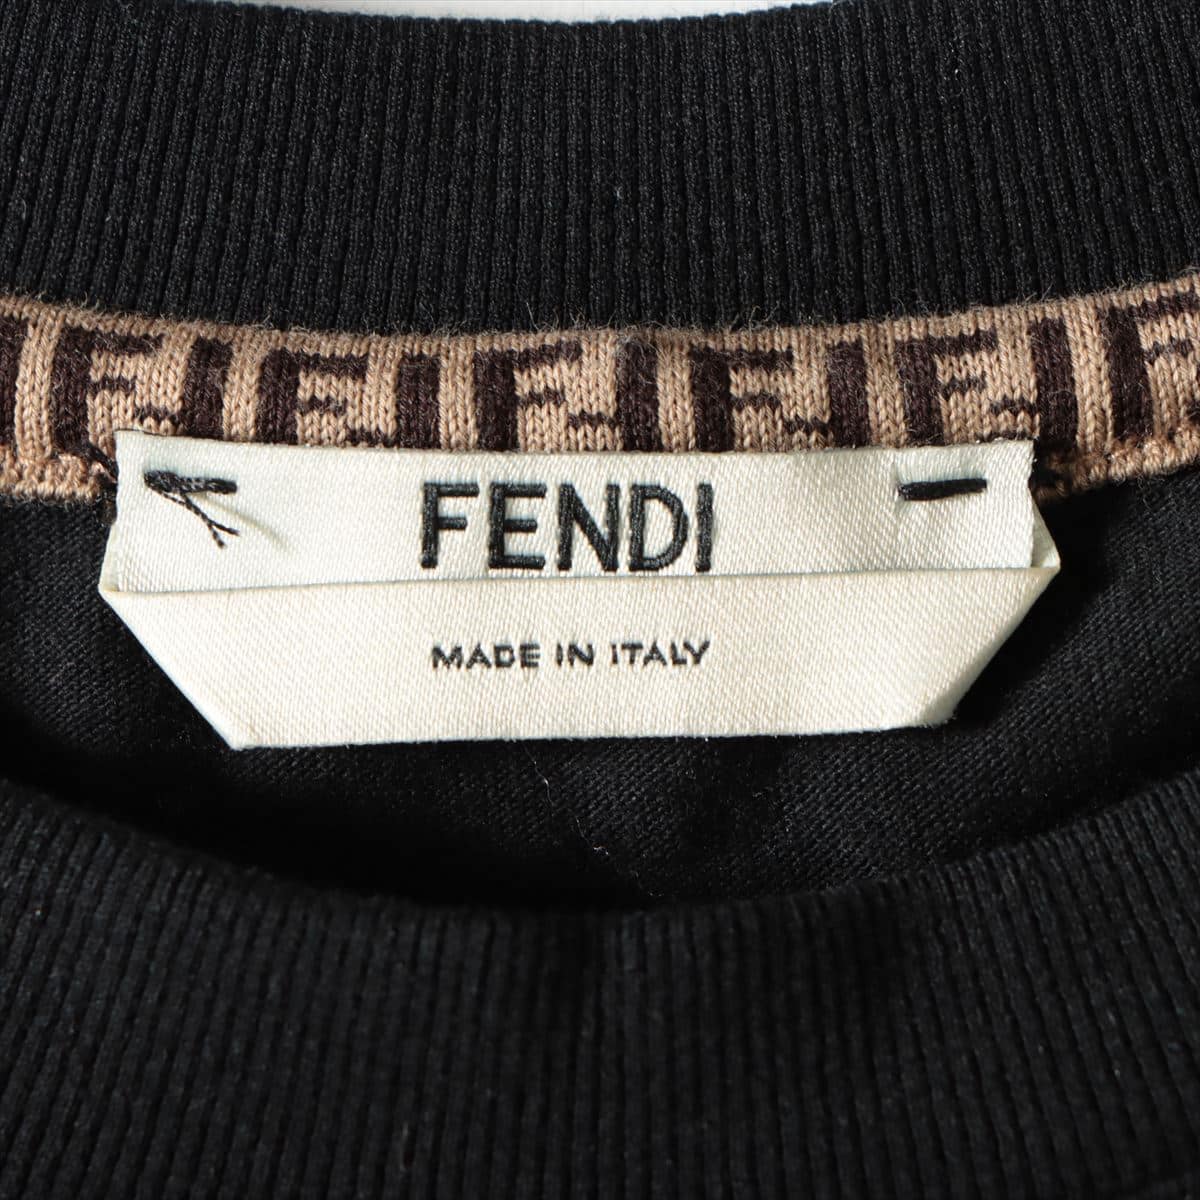 Fendi 20 years Cotton Dress M Ladies' Black